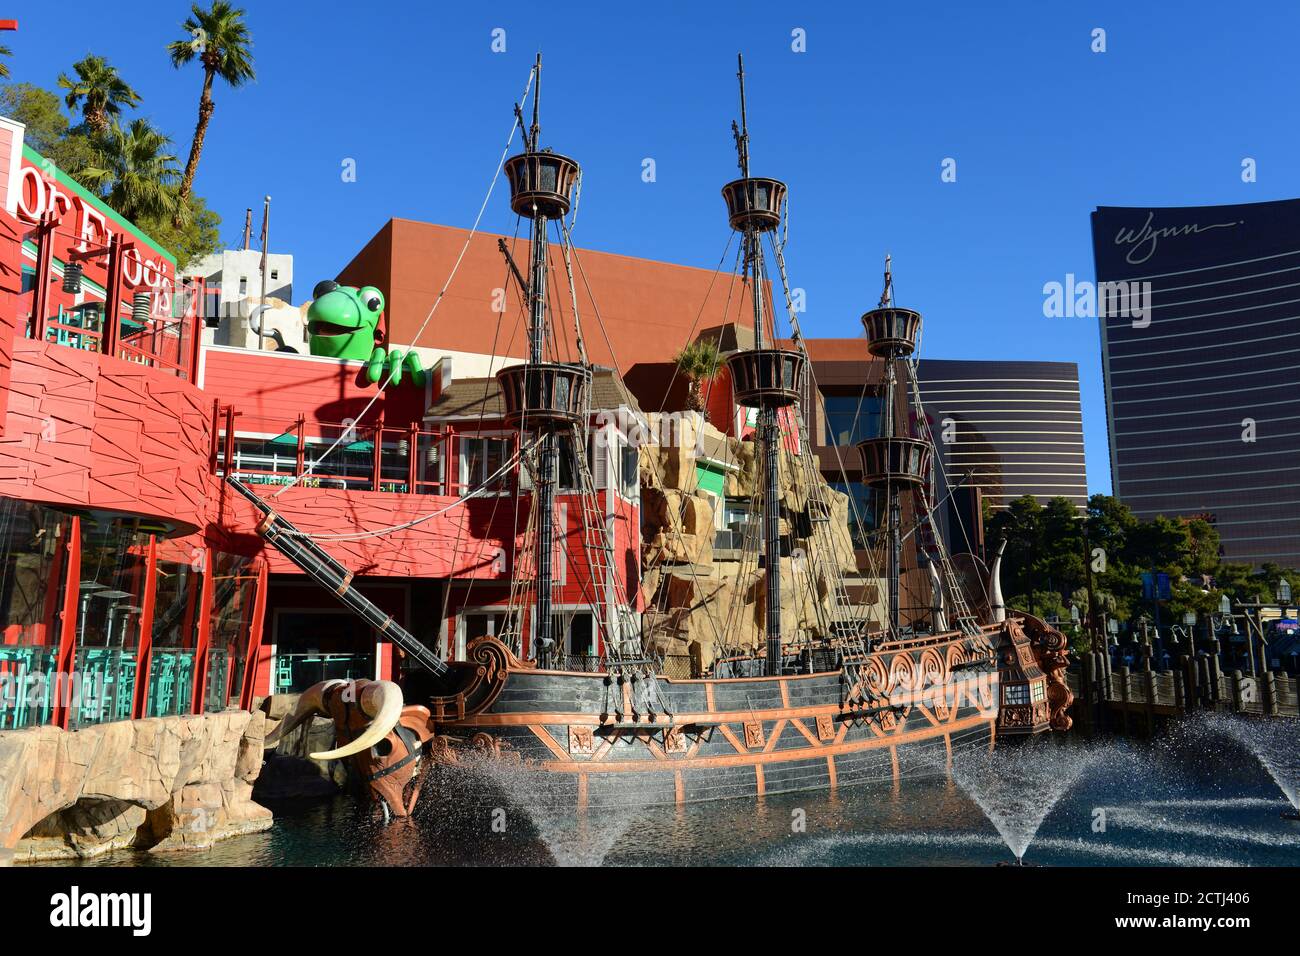 Treasure Island is a luxury resort and casino on Las Vegas Strip in Las Vegas, Nevada NV, USA. The hotel has Caribbean Pirates theme. Stock Photo